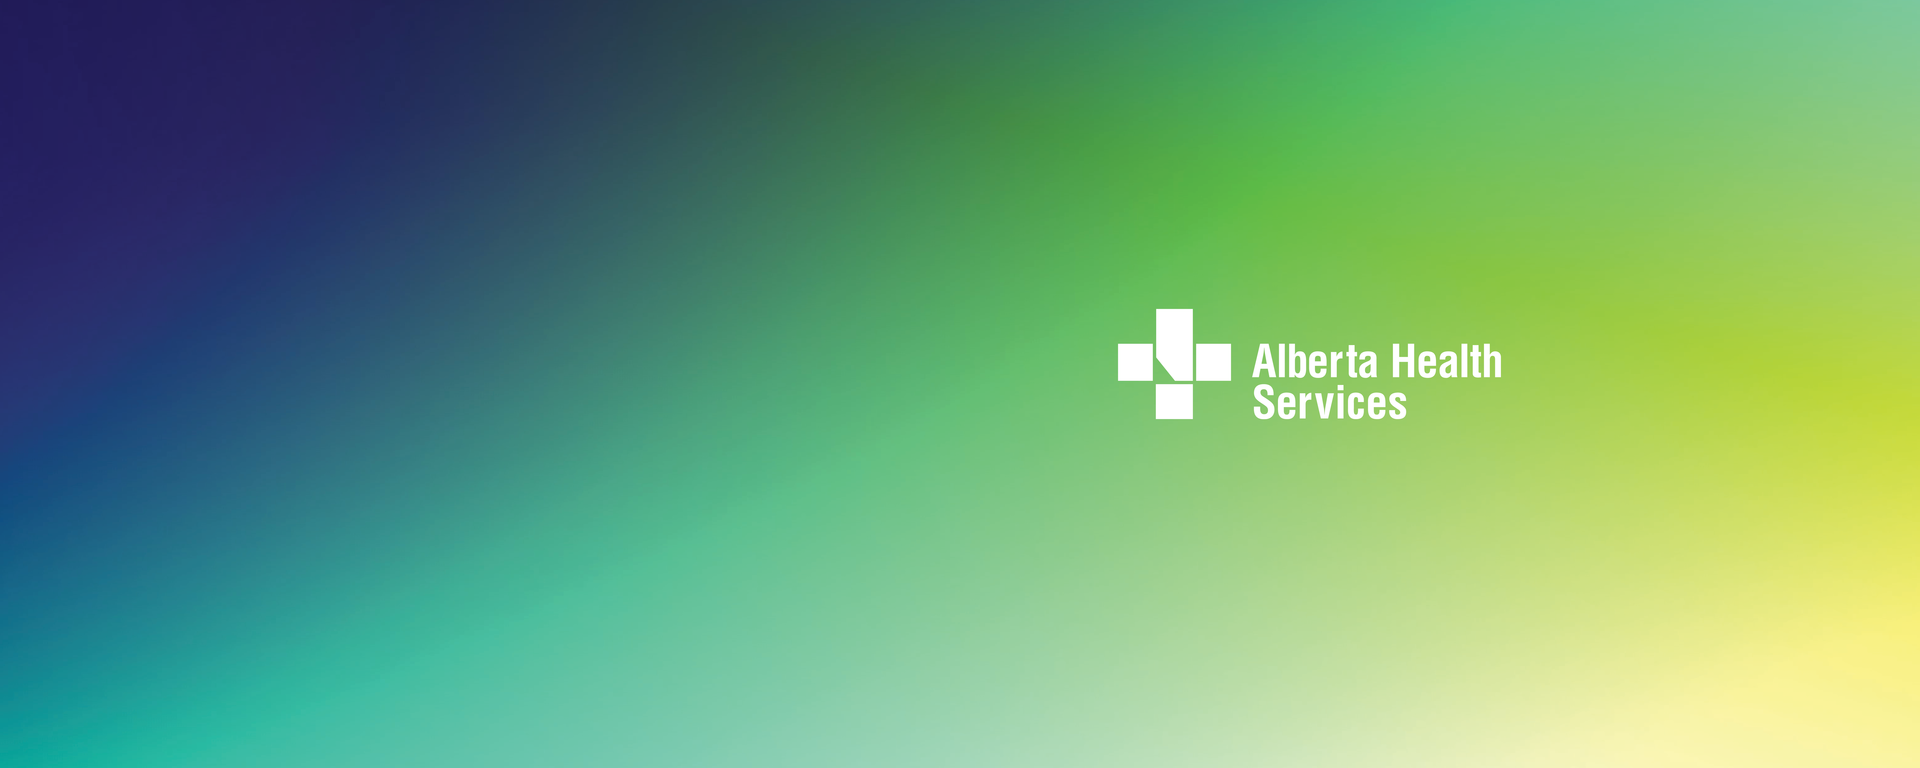 Alberta Health Services logo on a gradient background